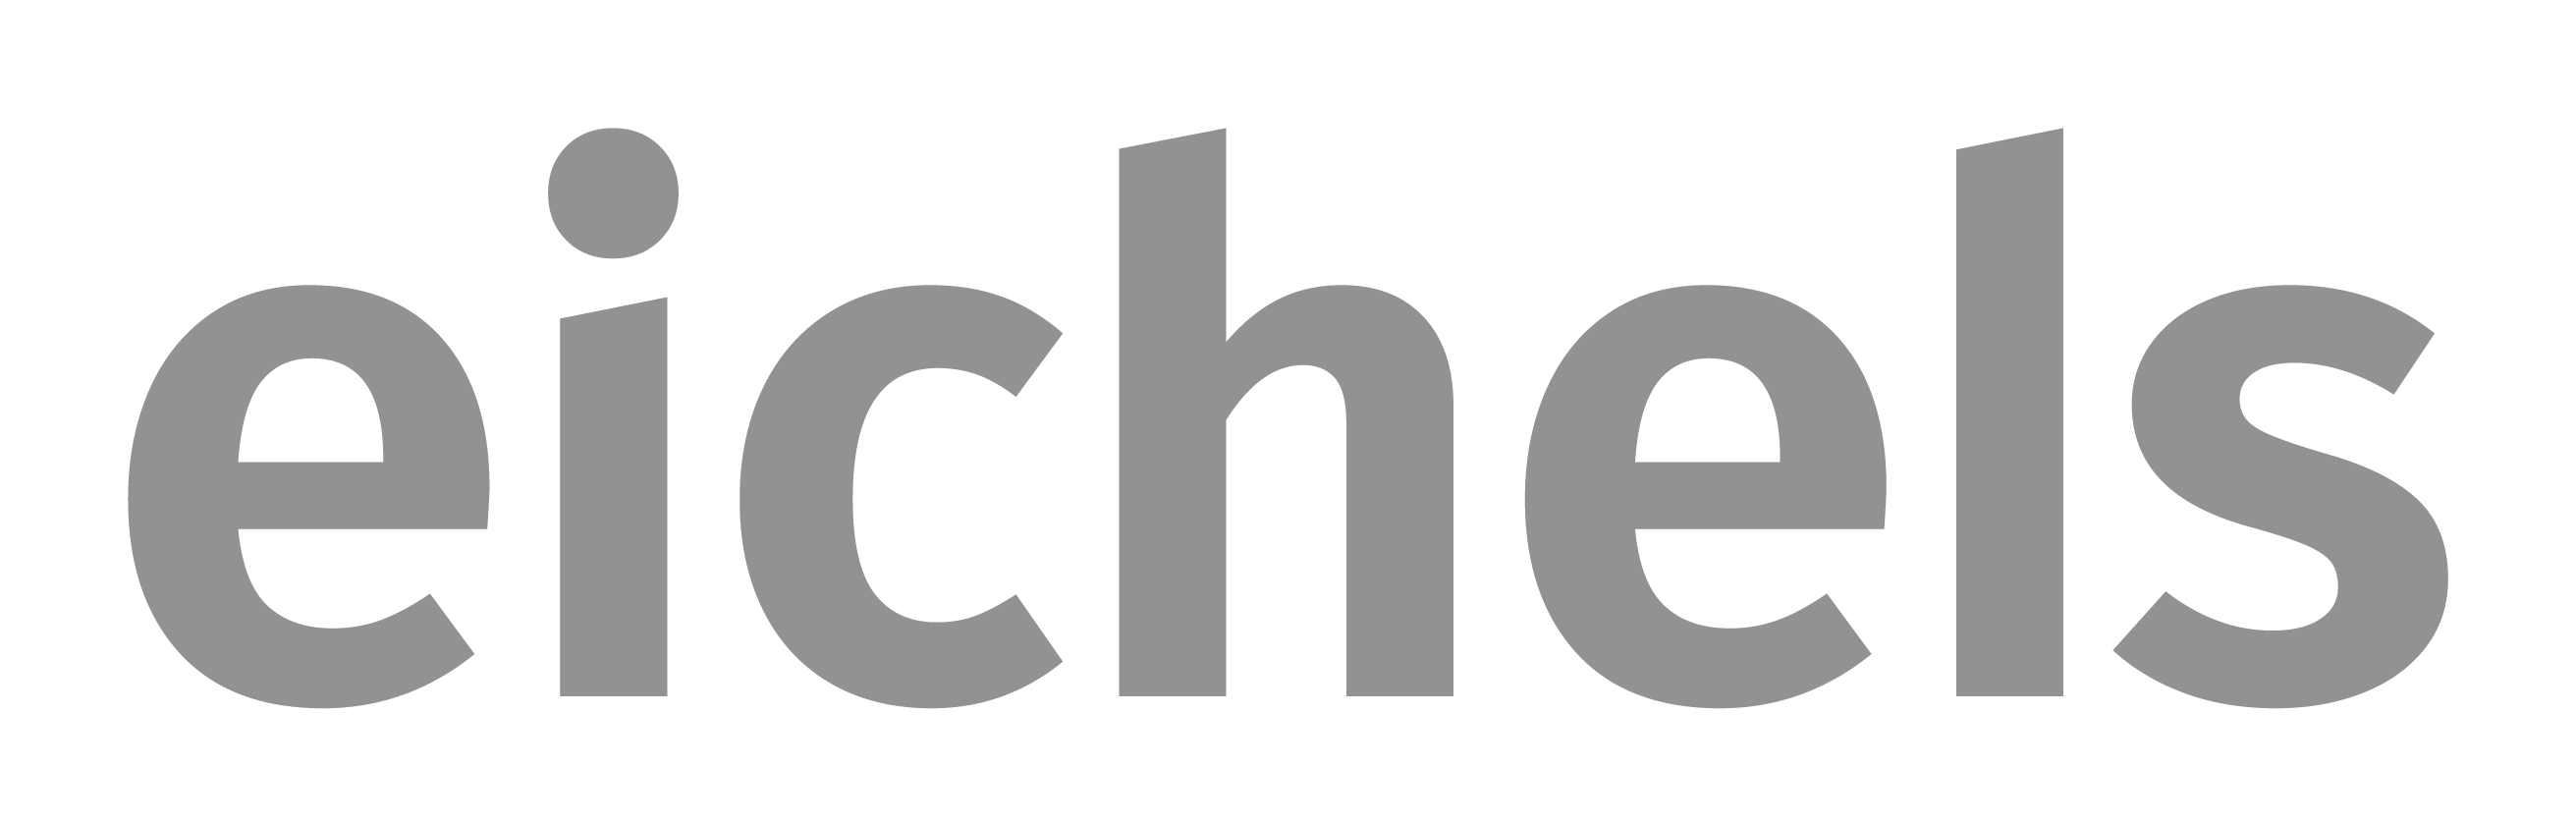 eichels GmbH